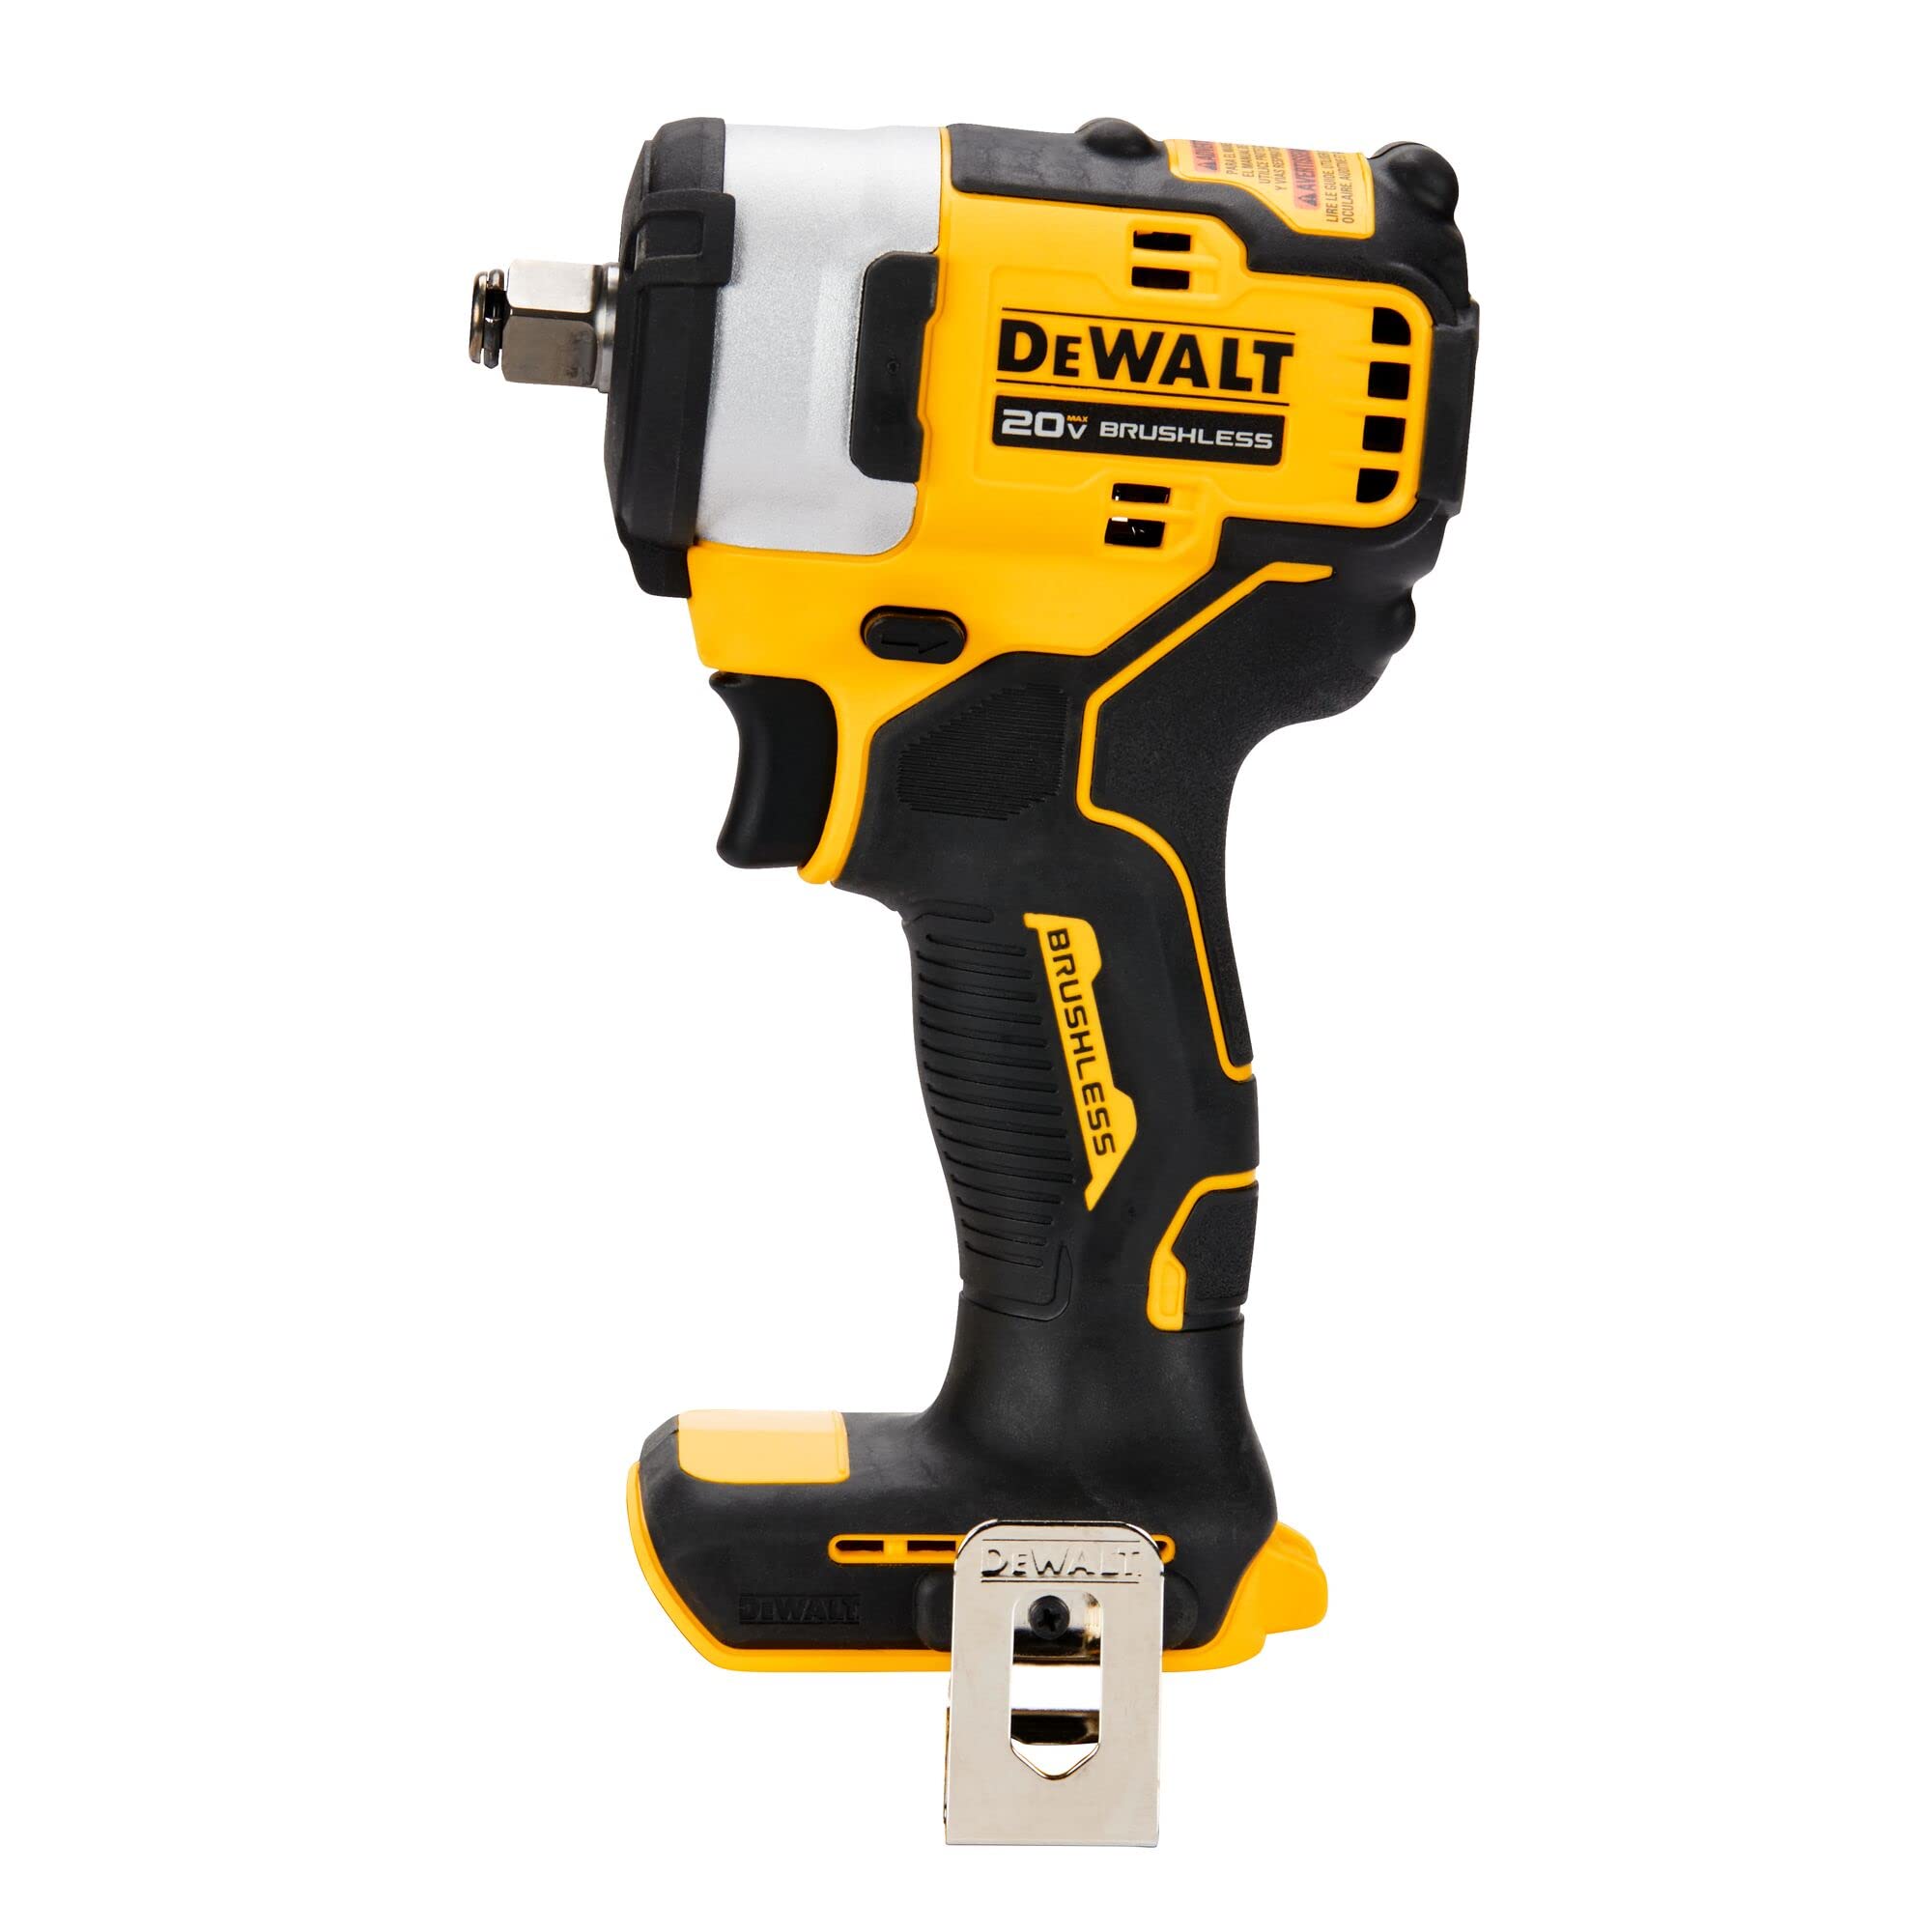 DEWALT 20V MAX Cordless Drill/Driver Kit, Brushless, 1/2-Inch (DCD791D2) + DEWALT DCF911B 20V MAX 1/2